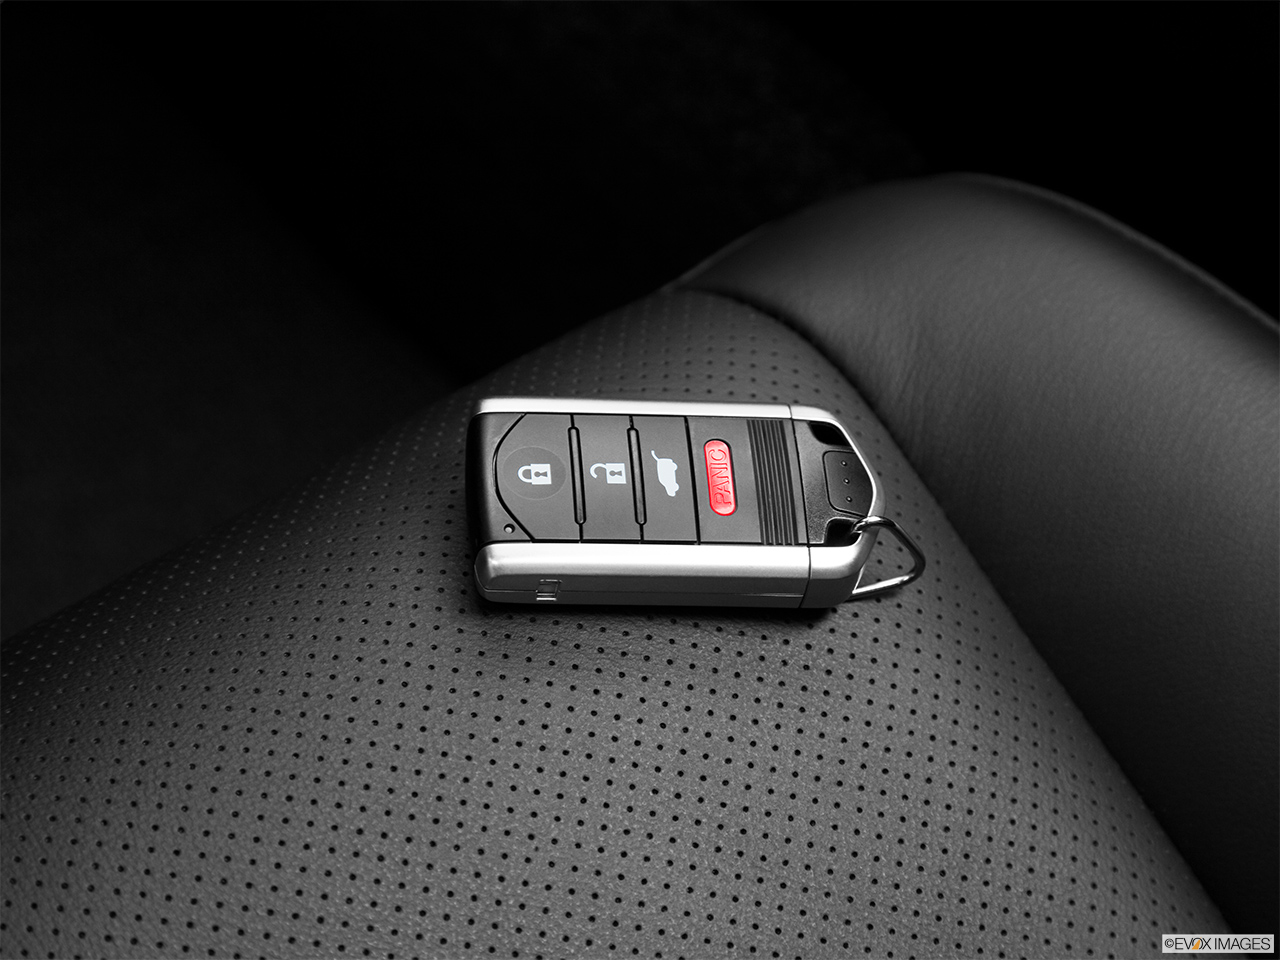 2011 Acura ZDX ZDX Technology Key fob on driver's seat. 